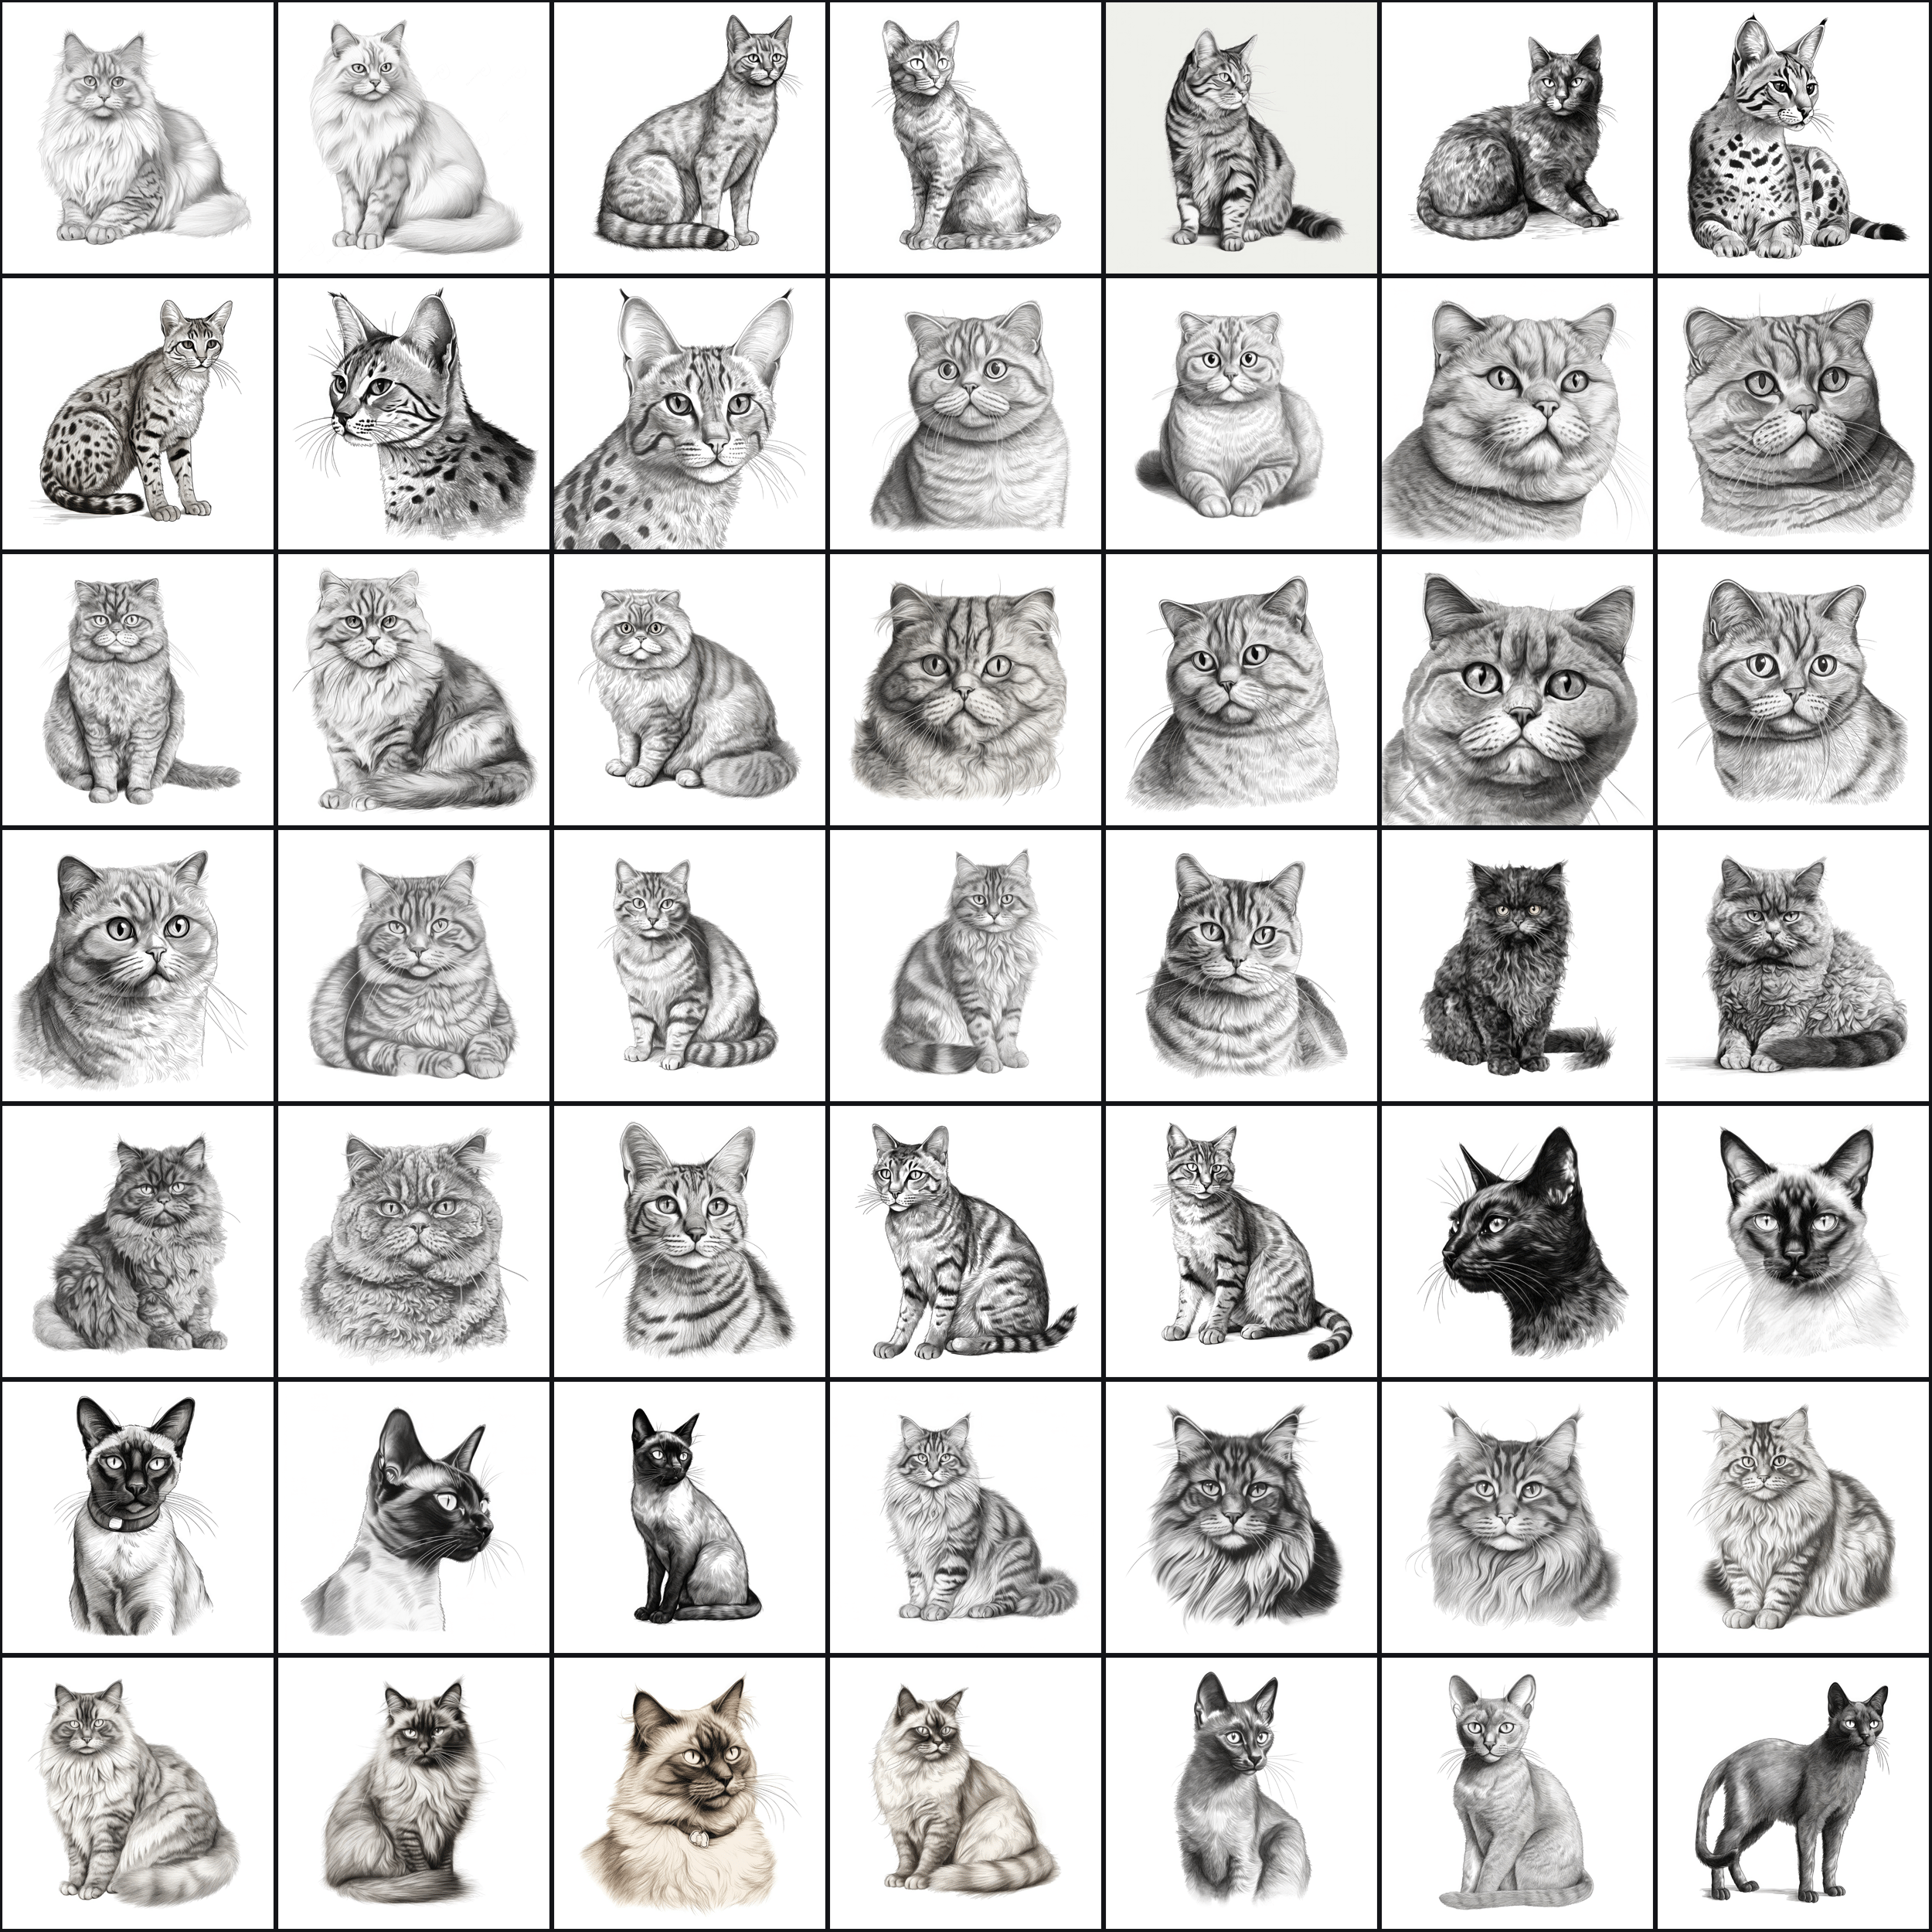 590 Sketch Cat Breed PNGs, Black & White Cat Images Digital Download Sumobundle